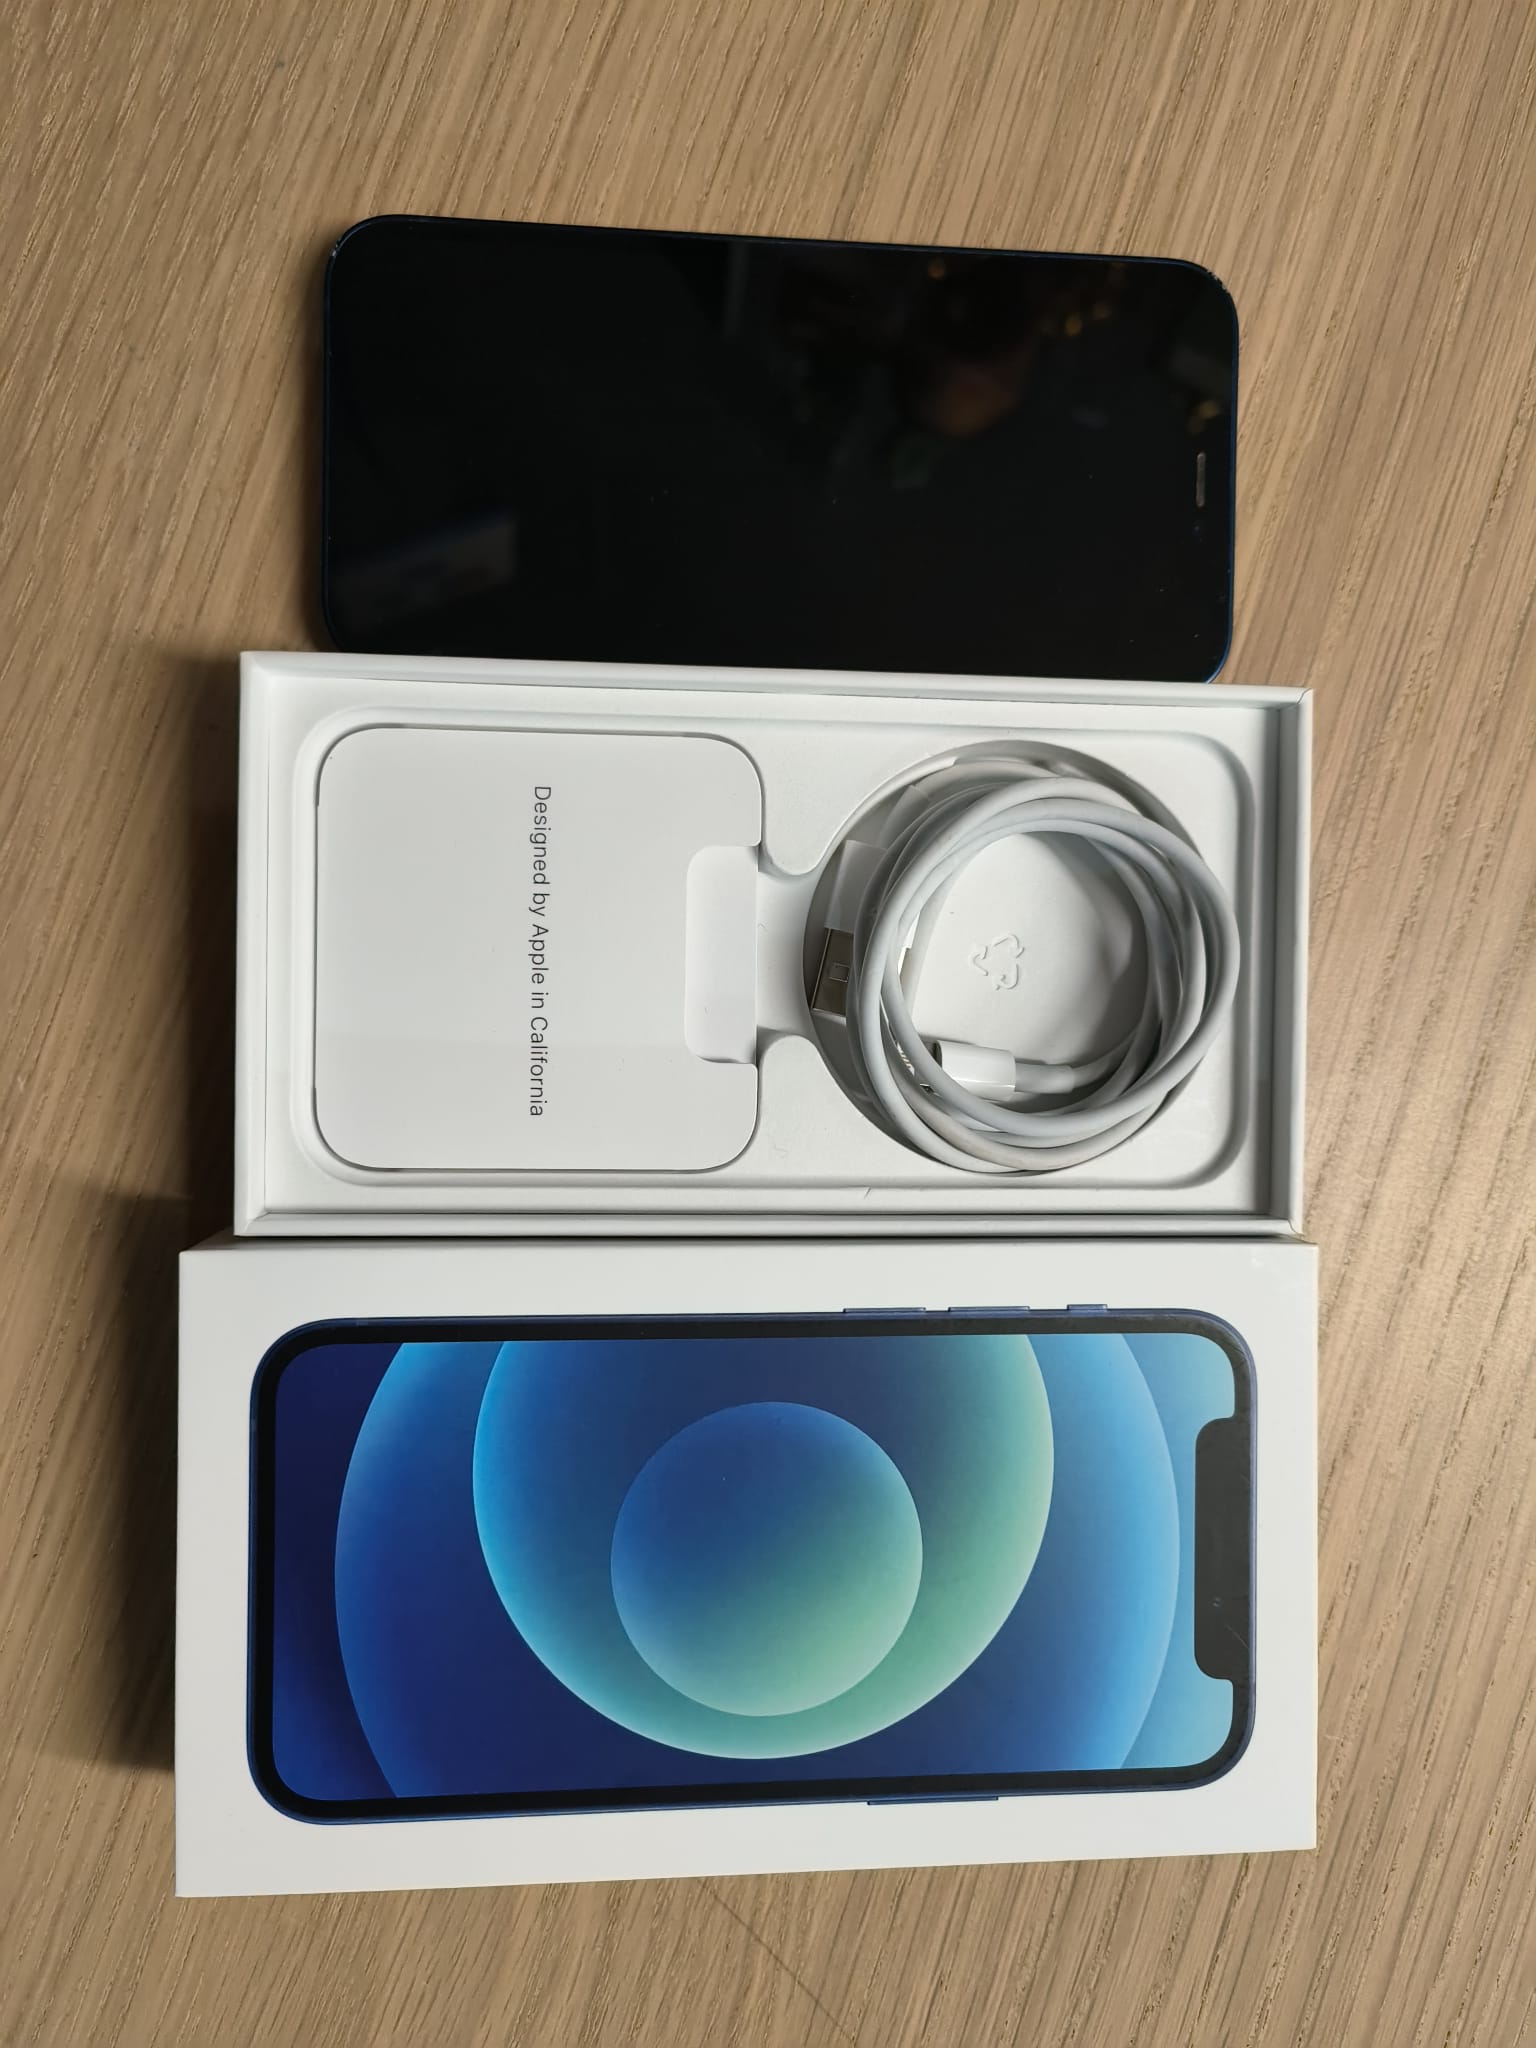 iPhone 12 Mini 5G 64GB Blau (Gebrauchtgerät)